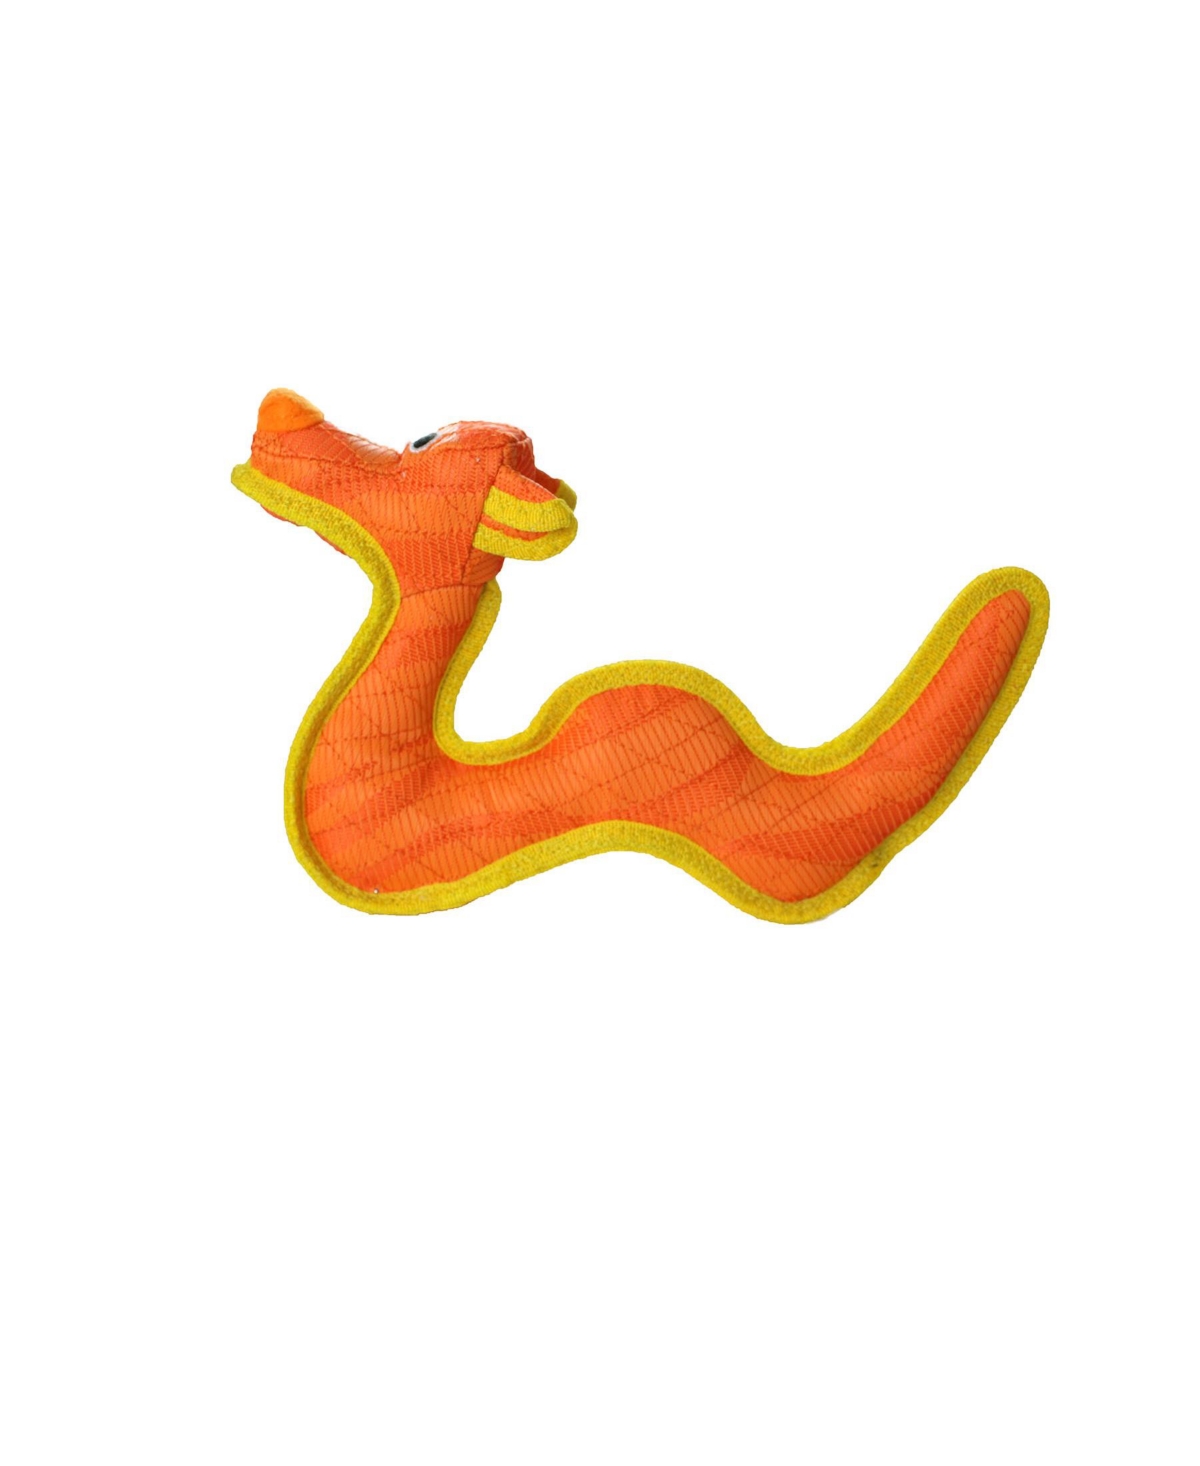 Dragon Tiger Orange-Yellow, Dog Toy - Bright Orange